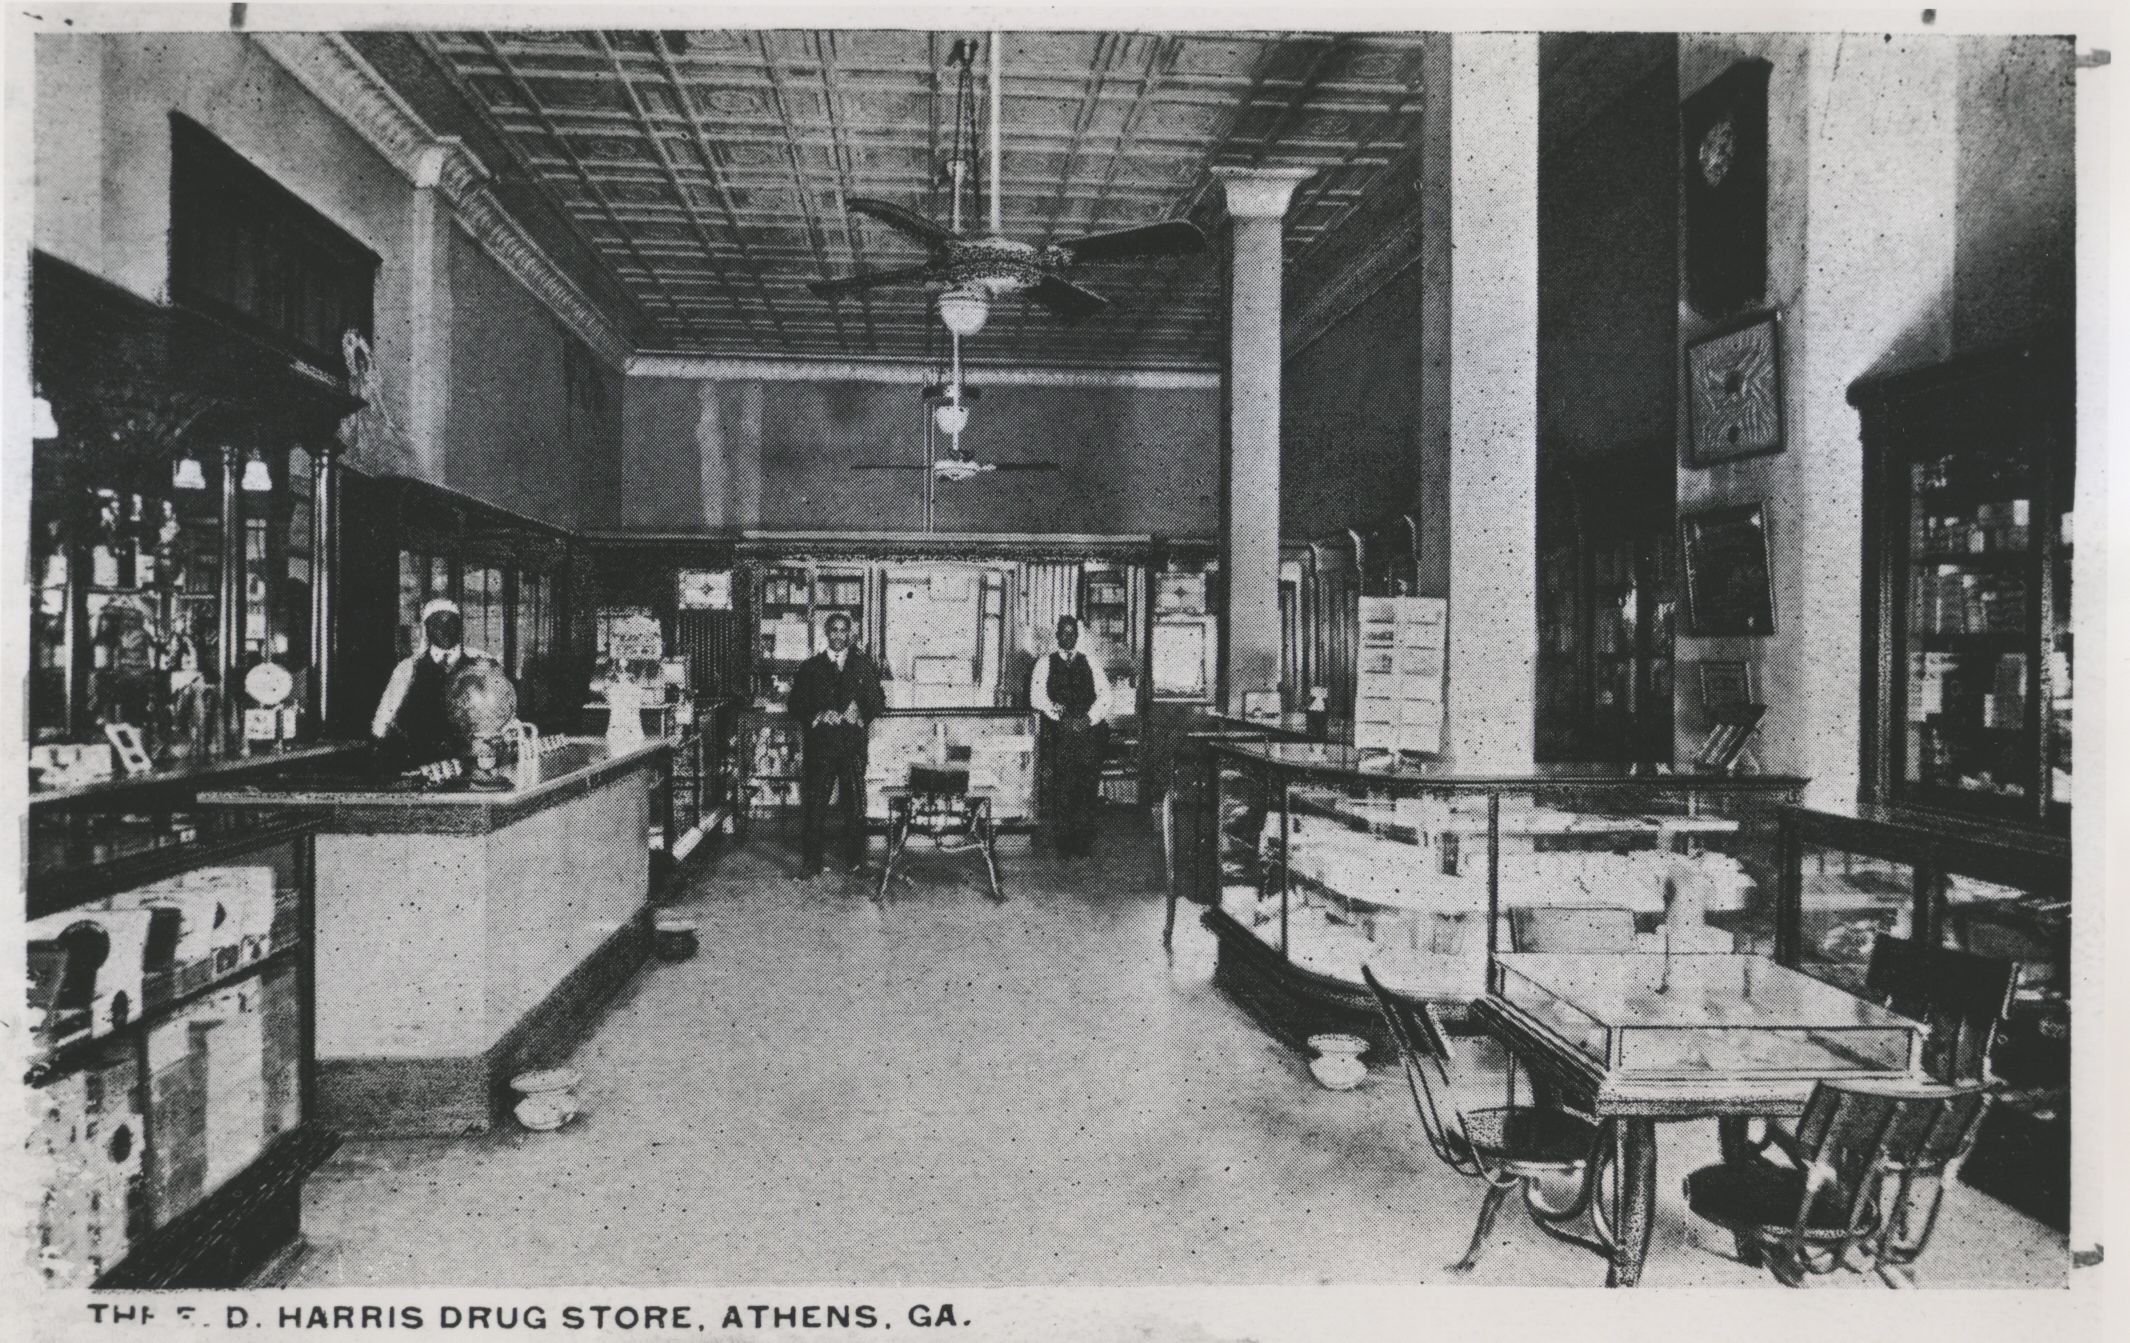 The Original E.D. Harris Pharmacy